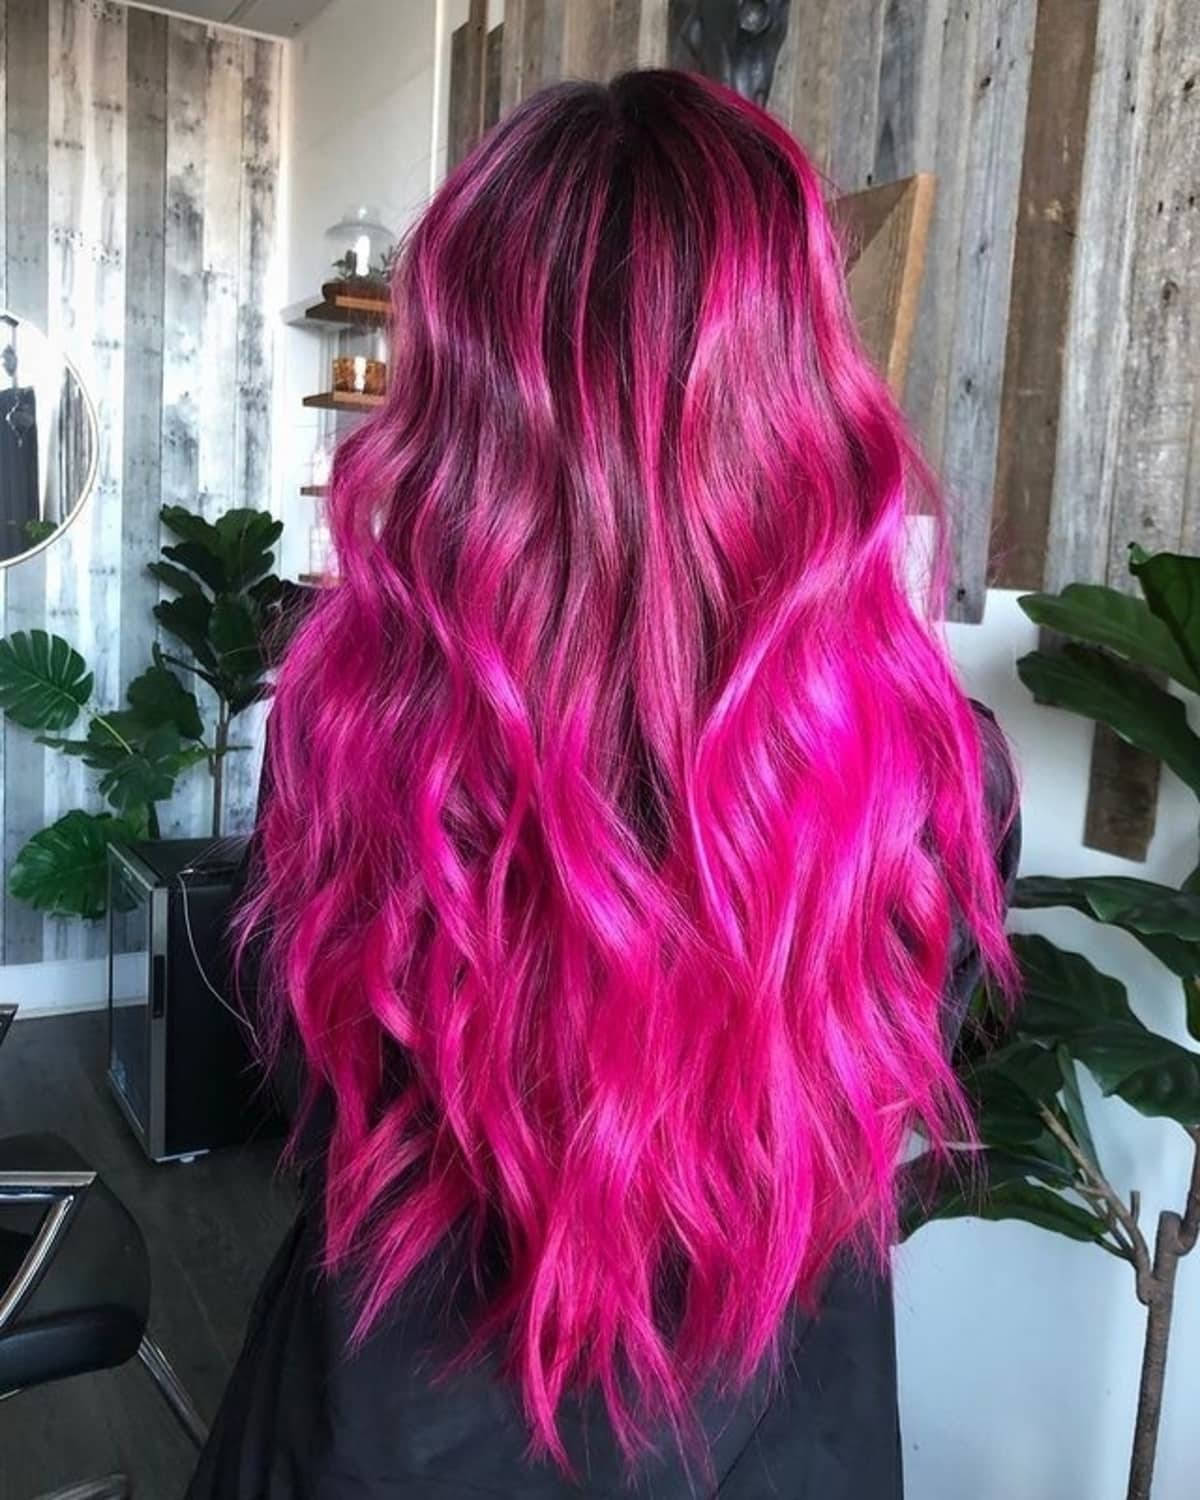 Caption: Vibrant Magenta Hair Waves Wallpaper